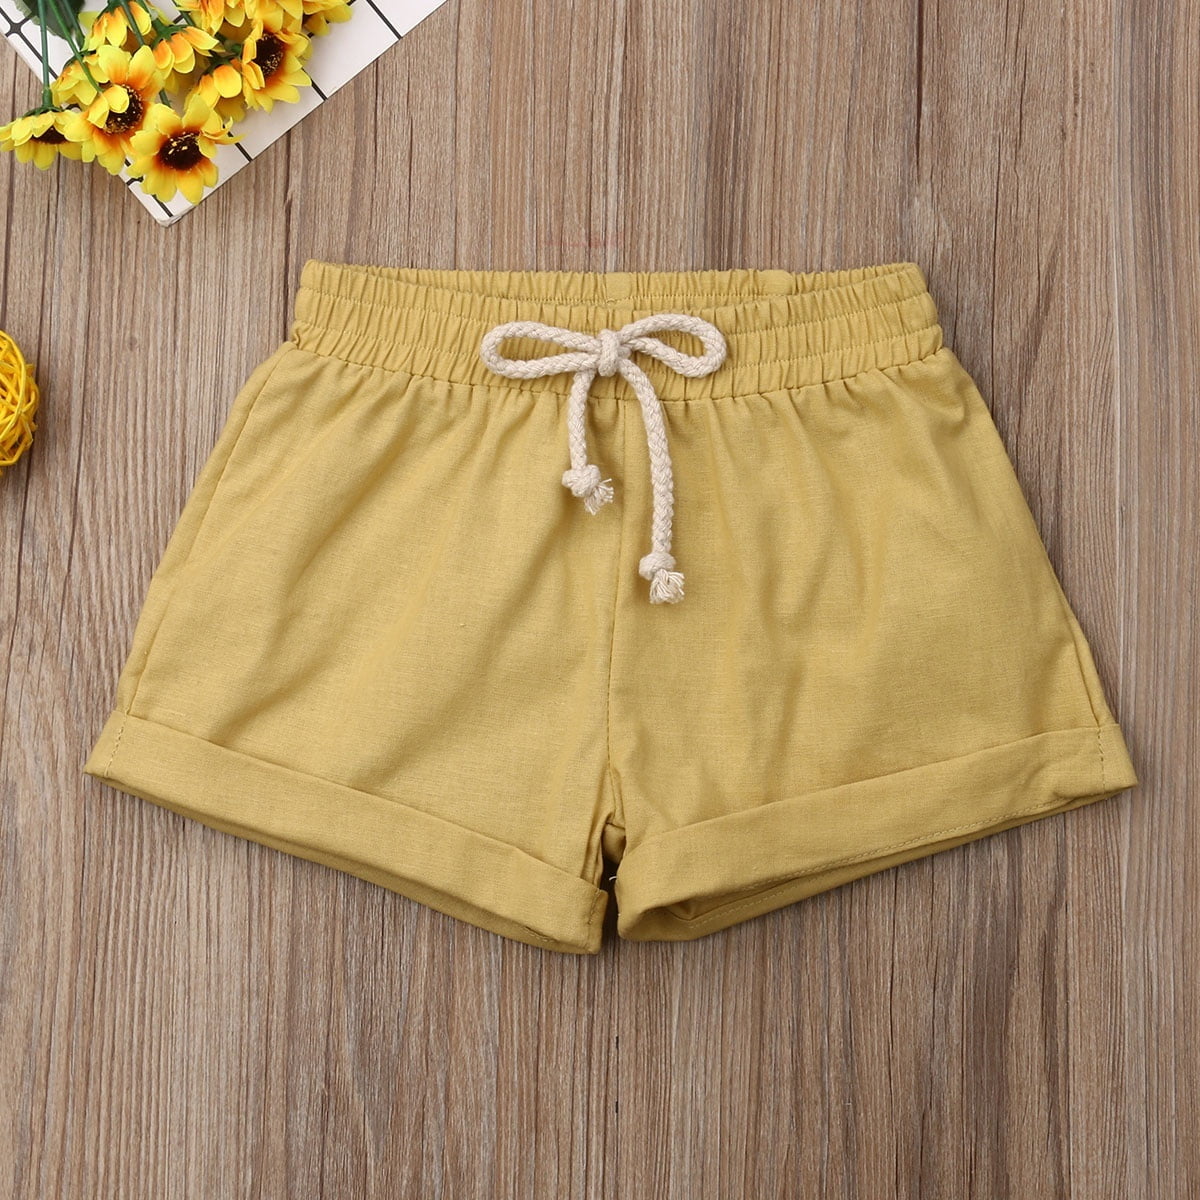 Fanteecy Baby Boys Linen Shorts Cute Toddler Kids Baby Boy Girl Casual Eelastic Short Pants Jogger Shorts Summer Outfit